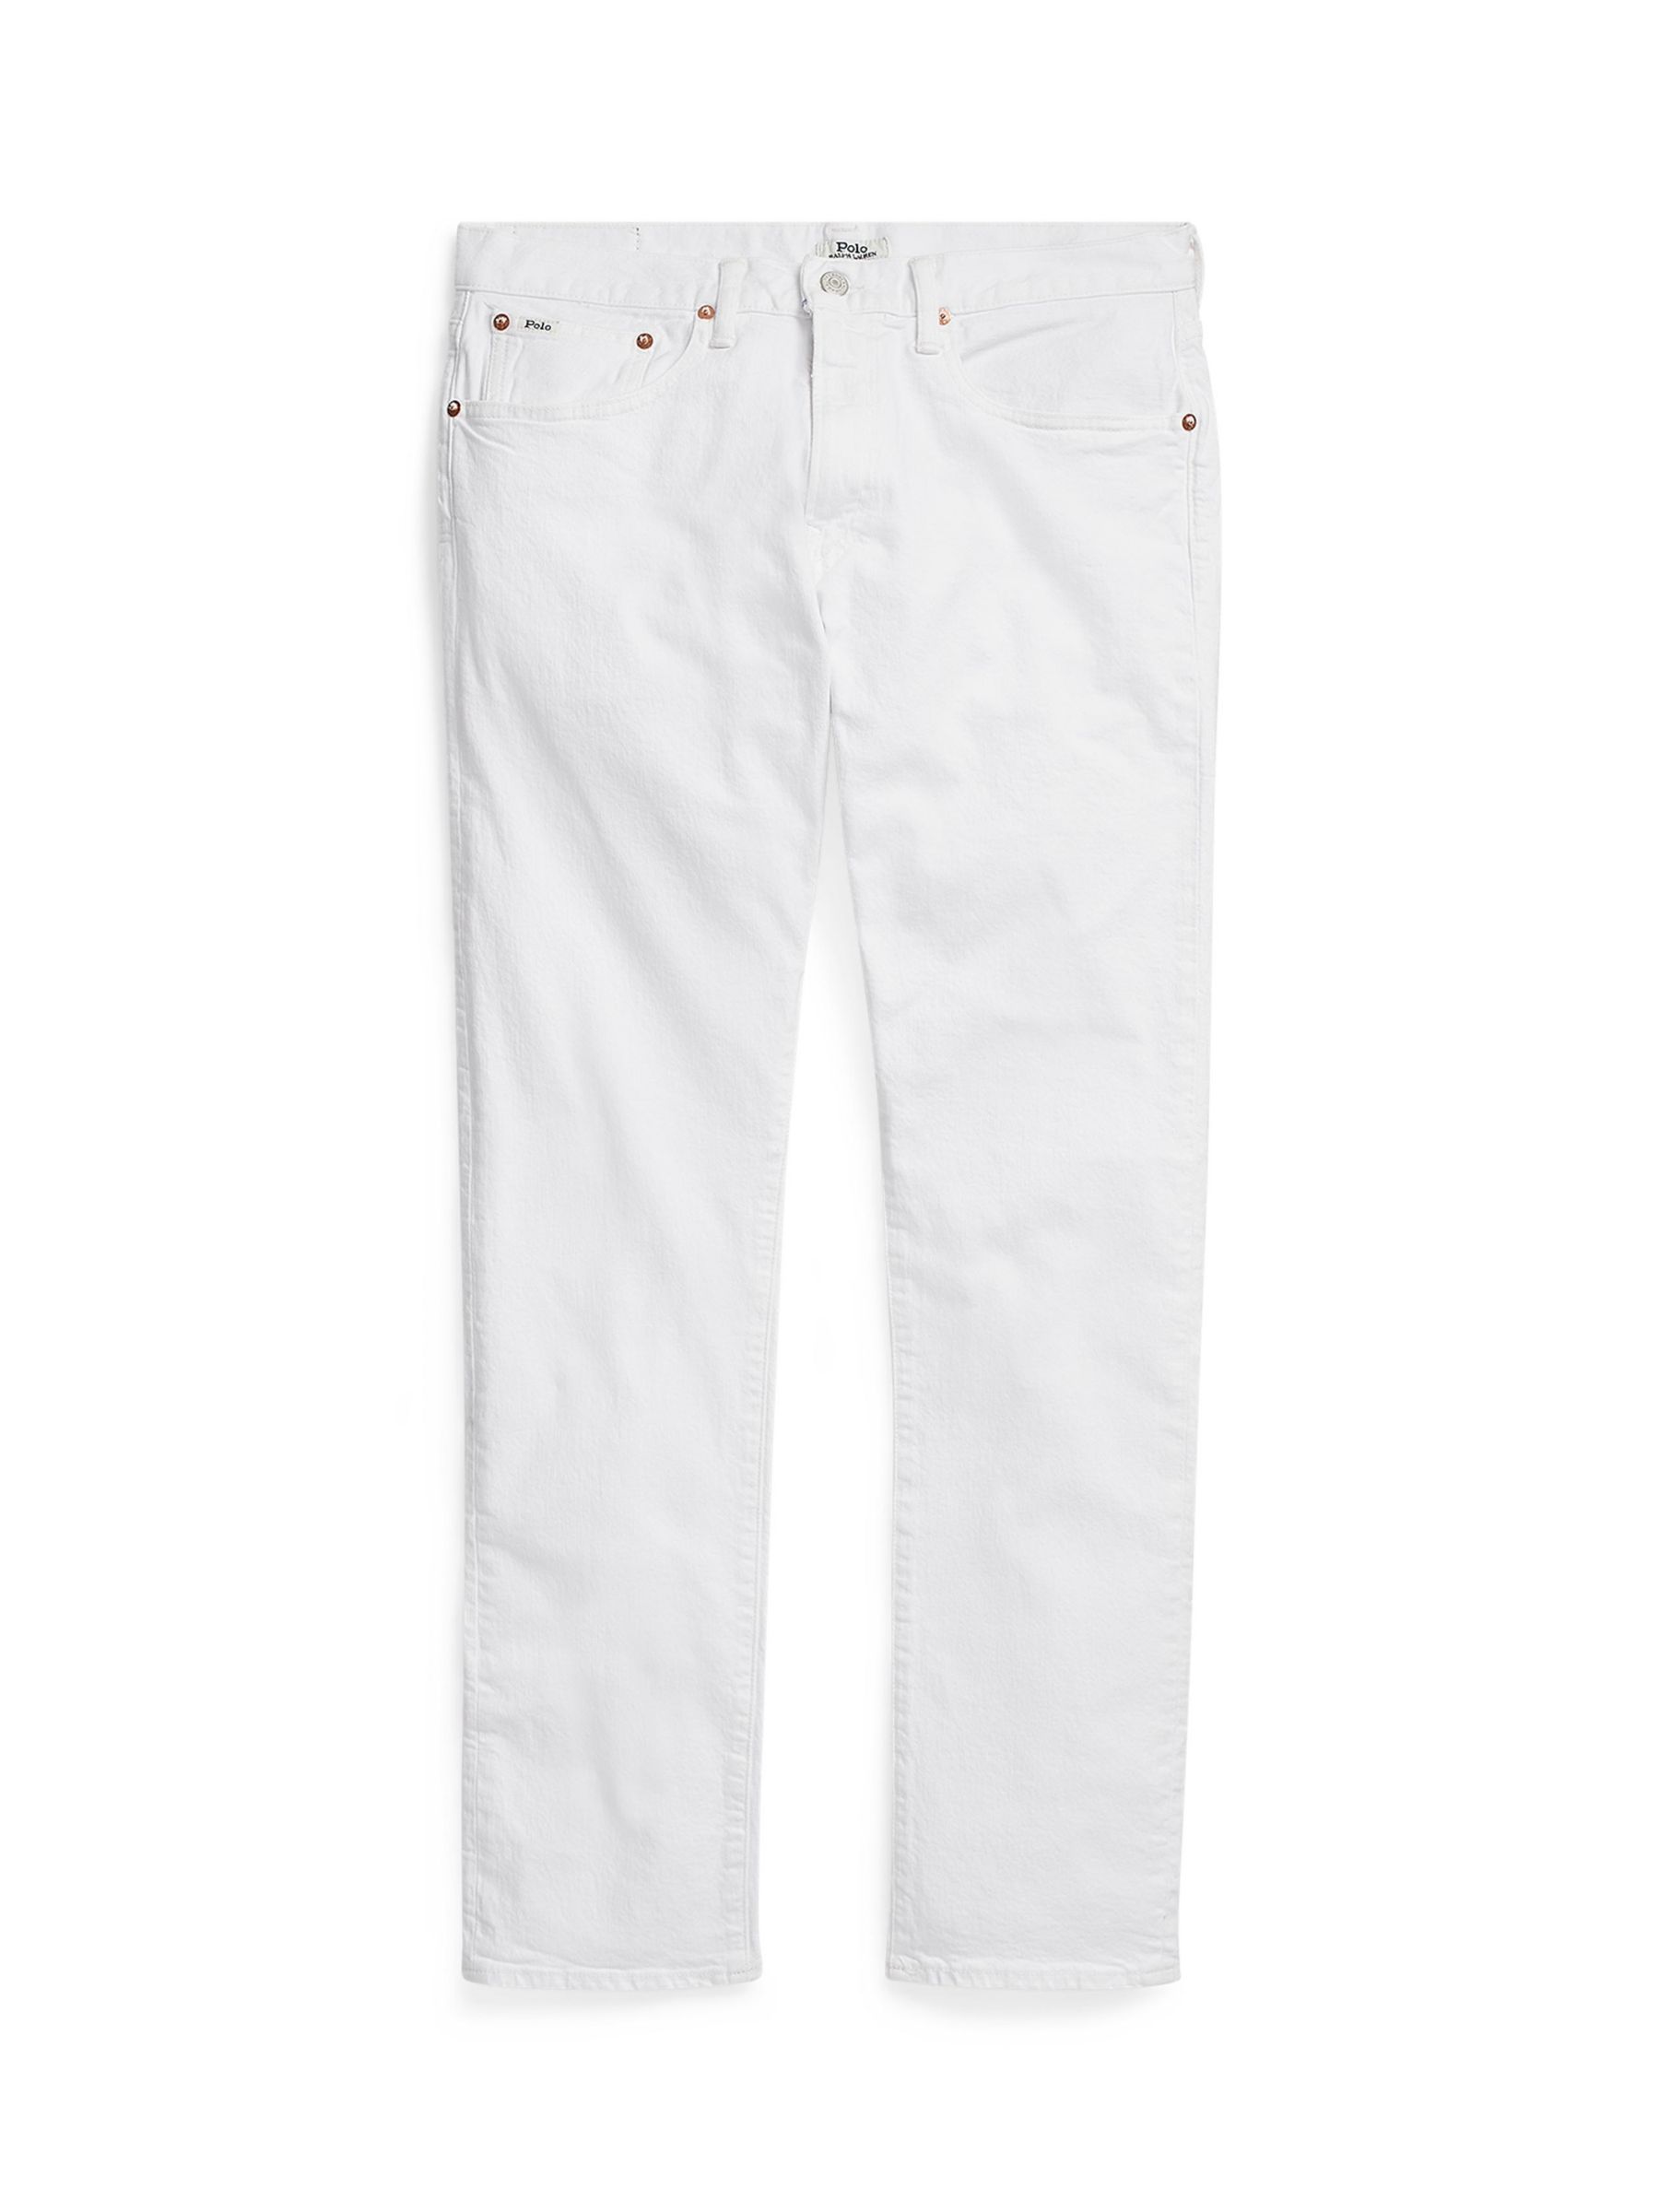 Buy Polo Ralph Lauren Sullivan Slim Stretch Fit Five Pocket Jeans, White Online at johnlewis.com